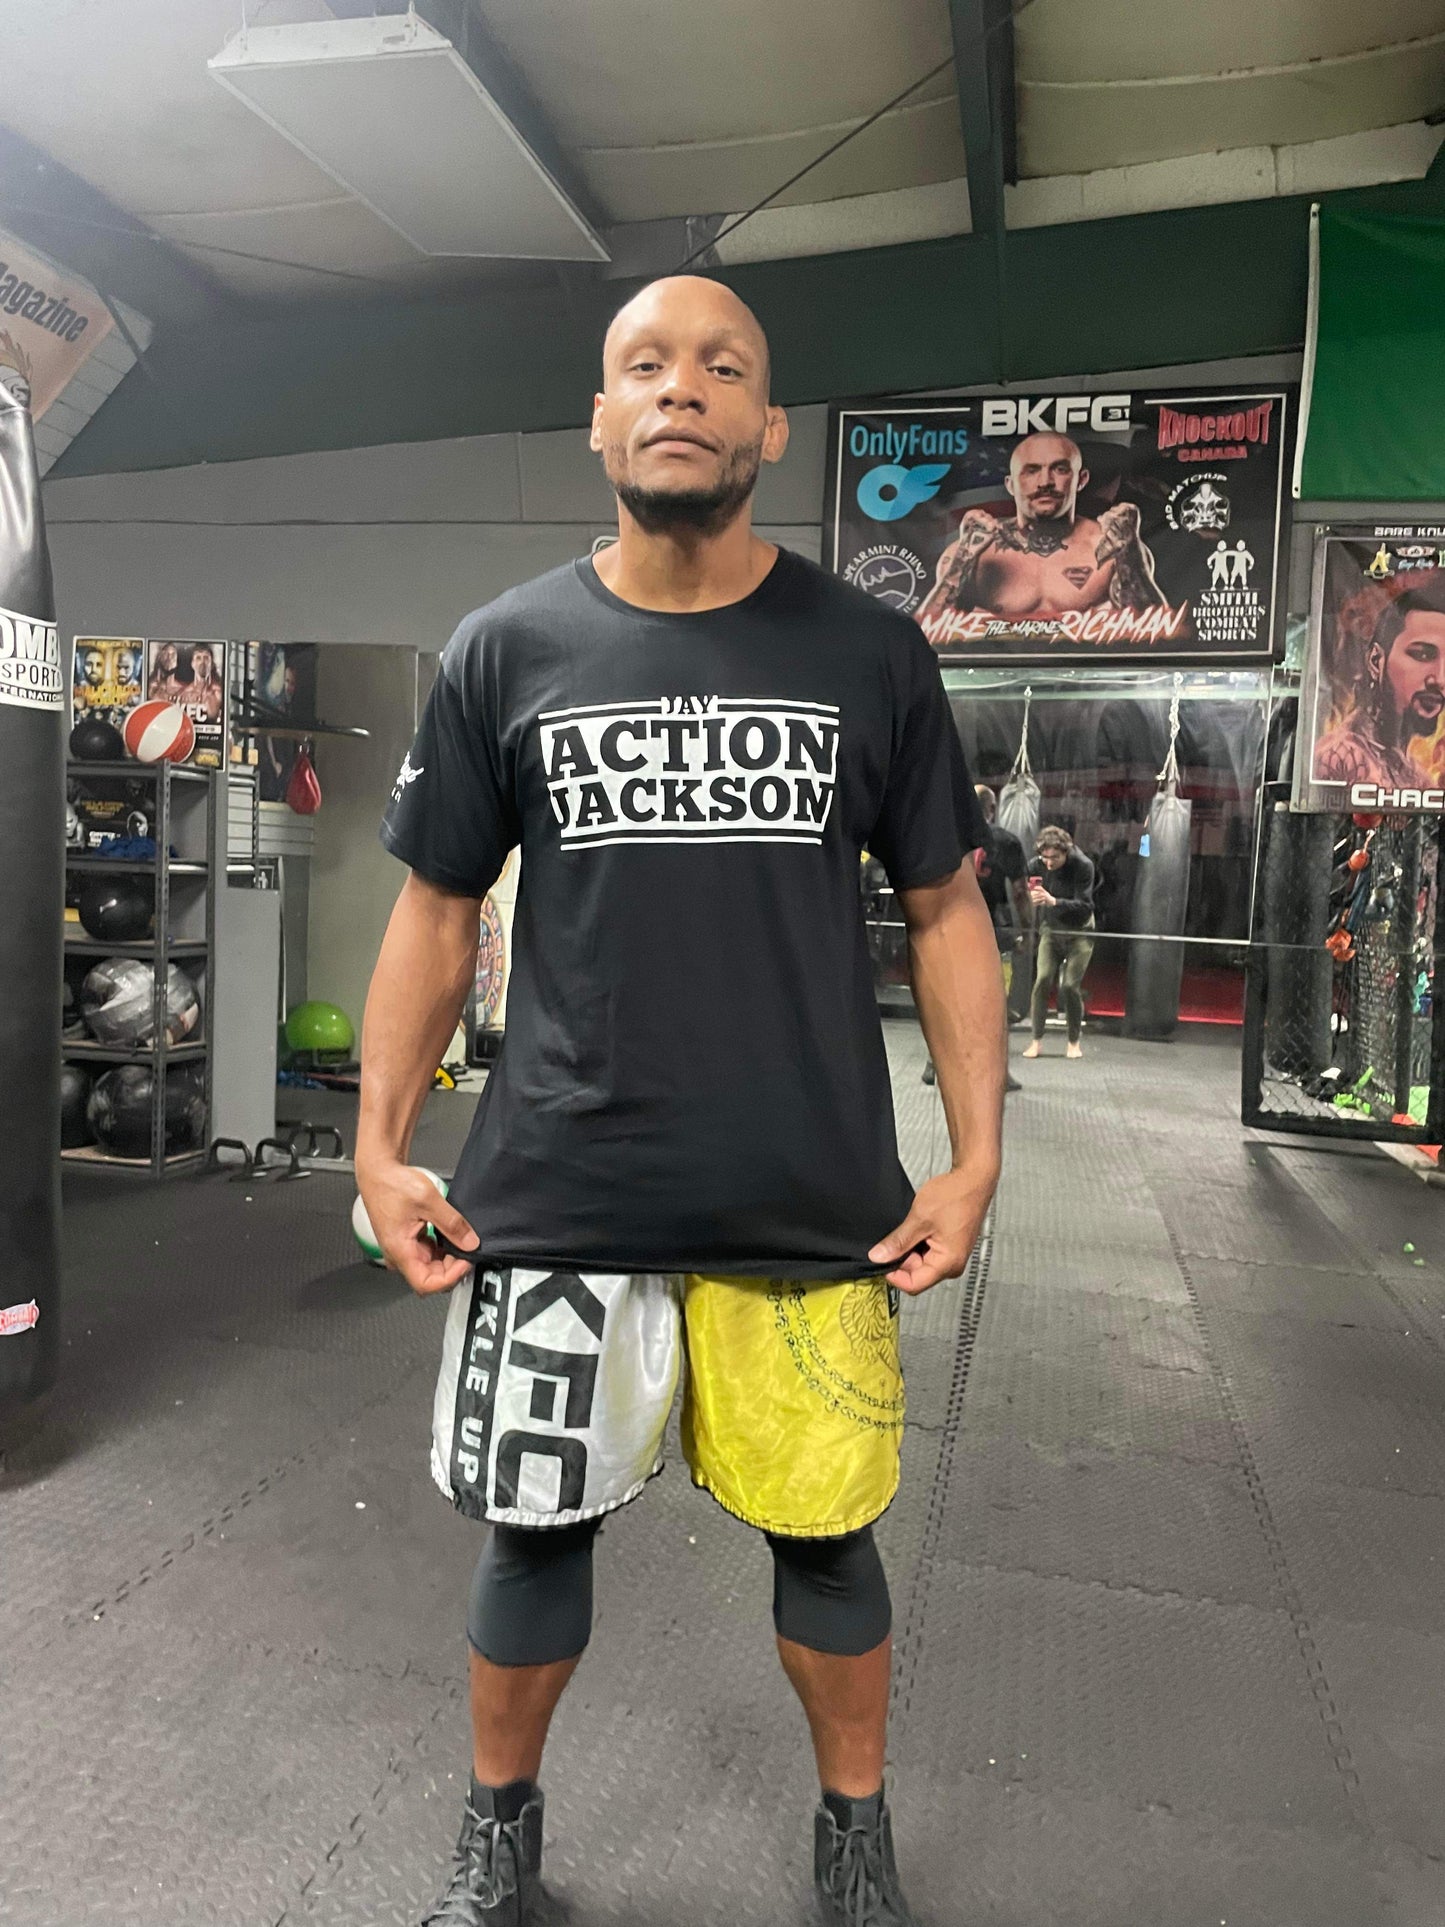 Jay “Action Jackson” Fight Shirt